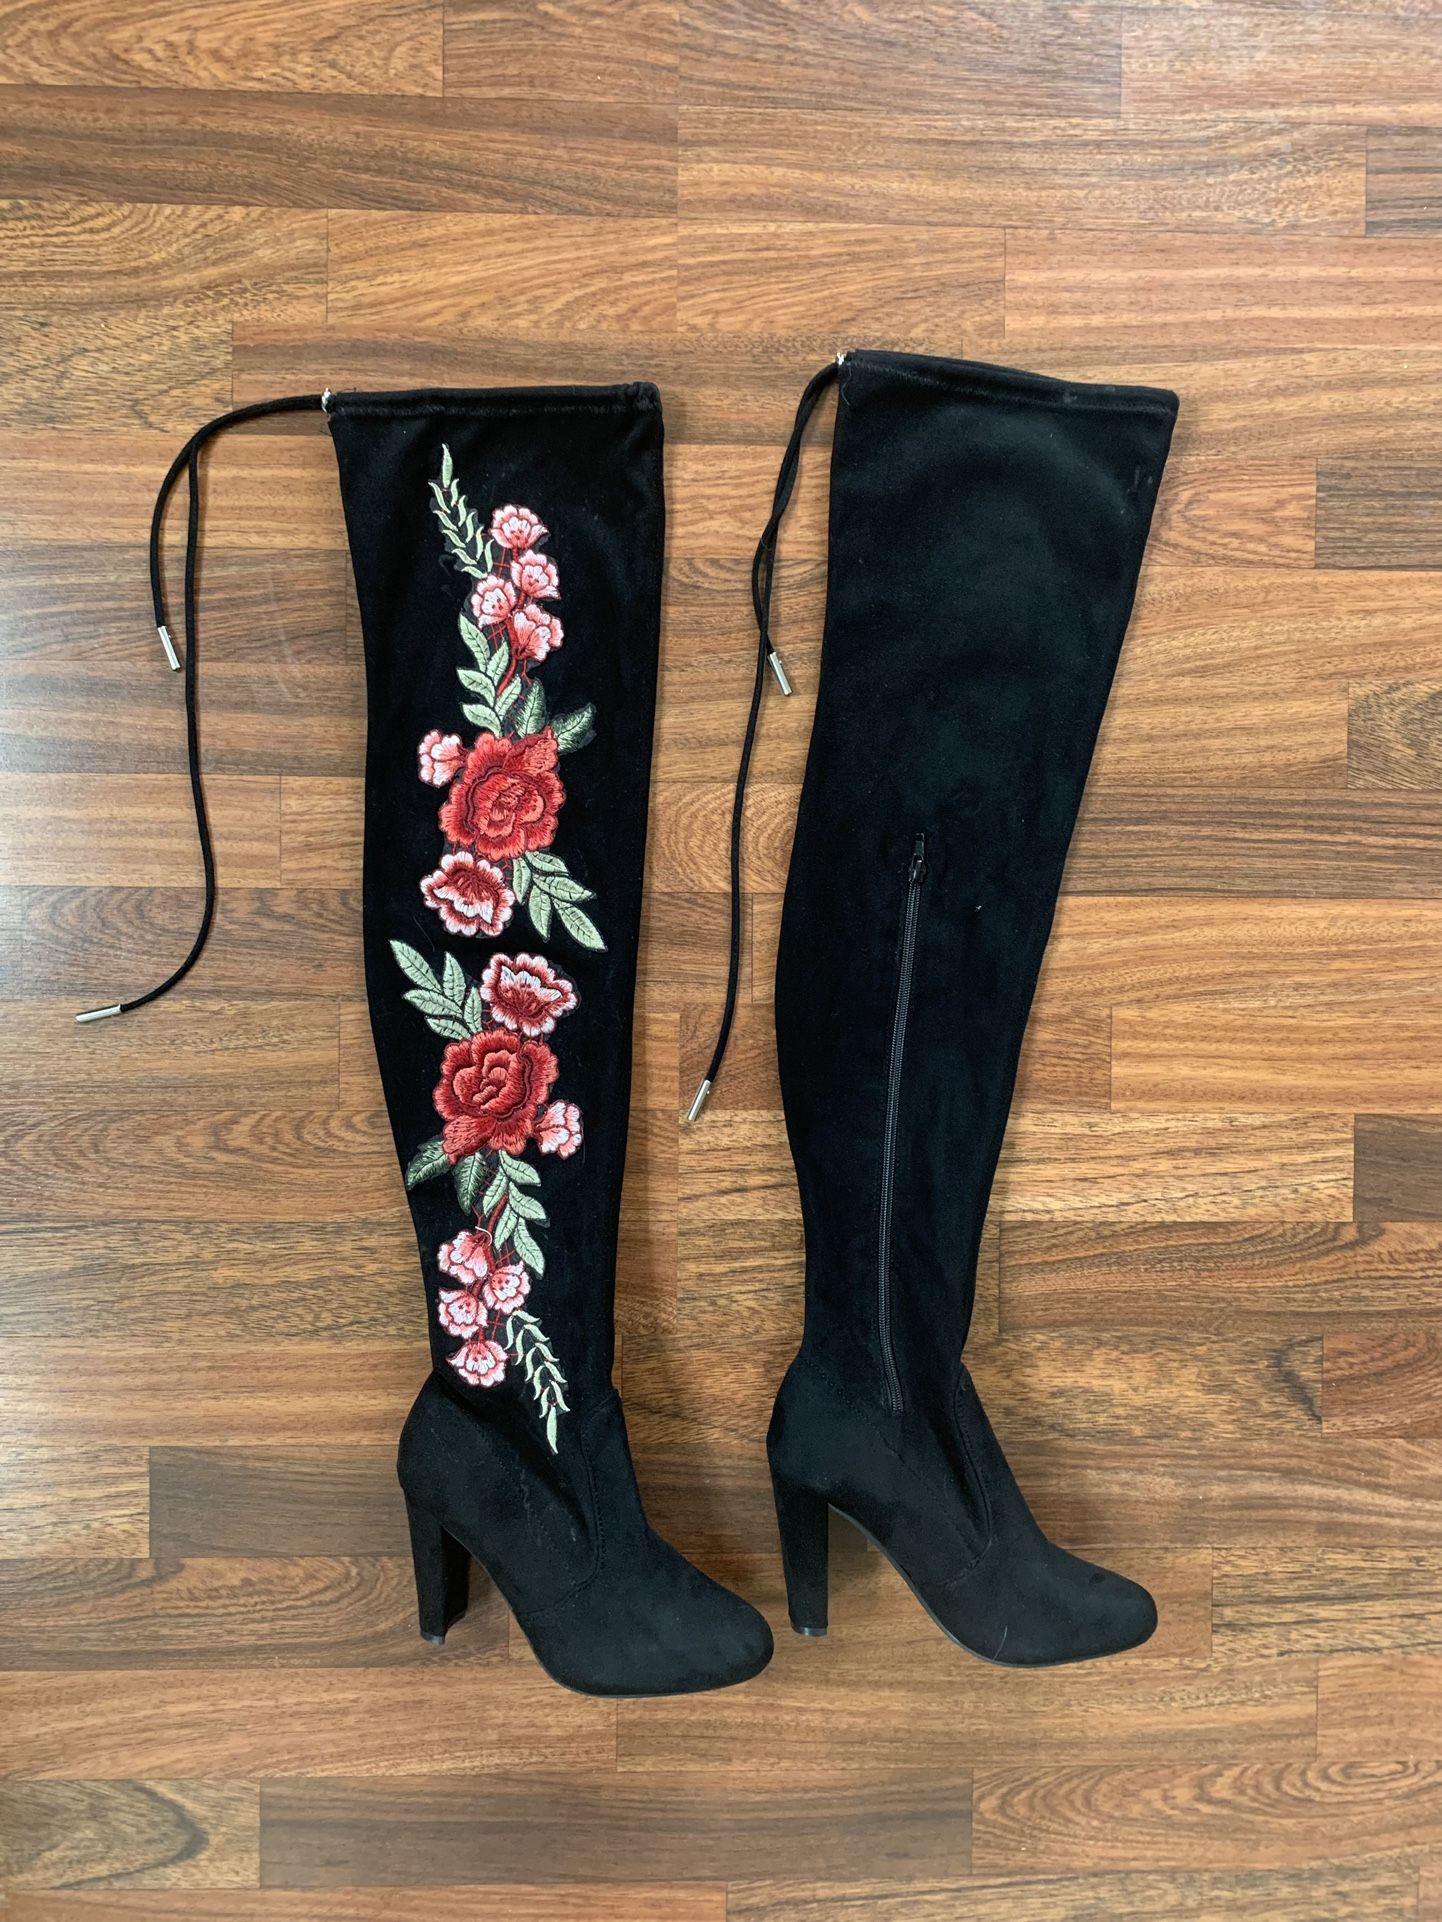 JustFab Tibbie Black Floral Boots, Size 7